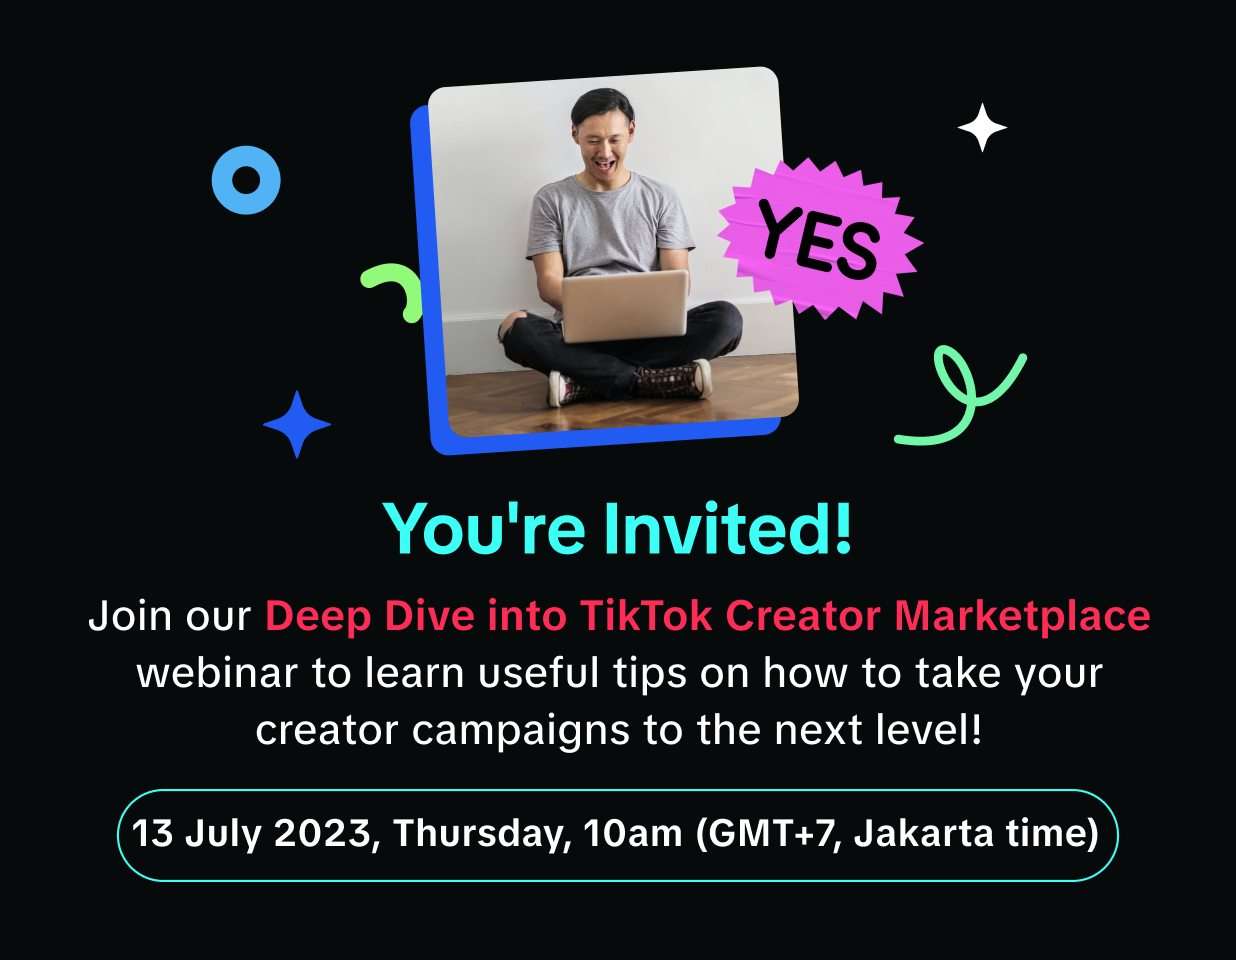 [Indonesia market only]: TTCM 102 Webinar: Deep Dive into TikTok Creator Marketplace